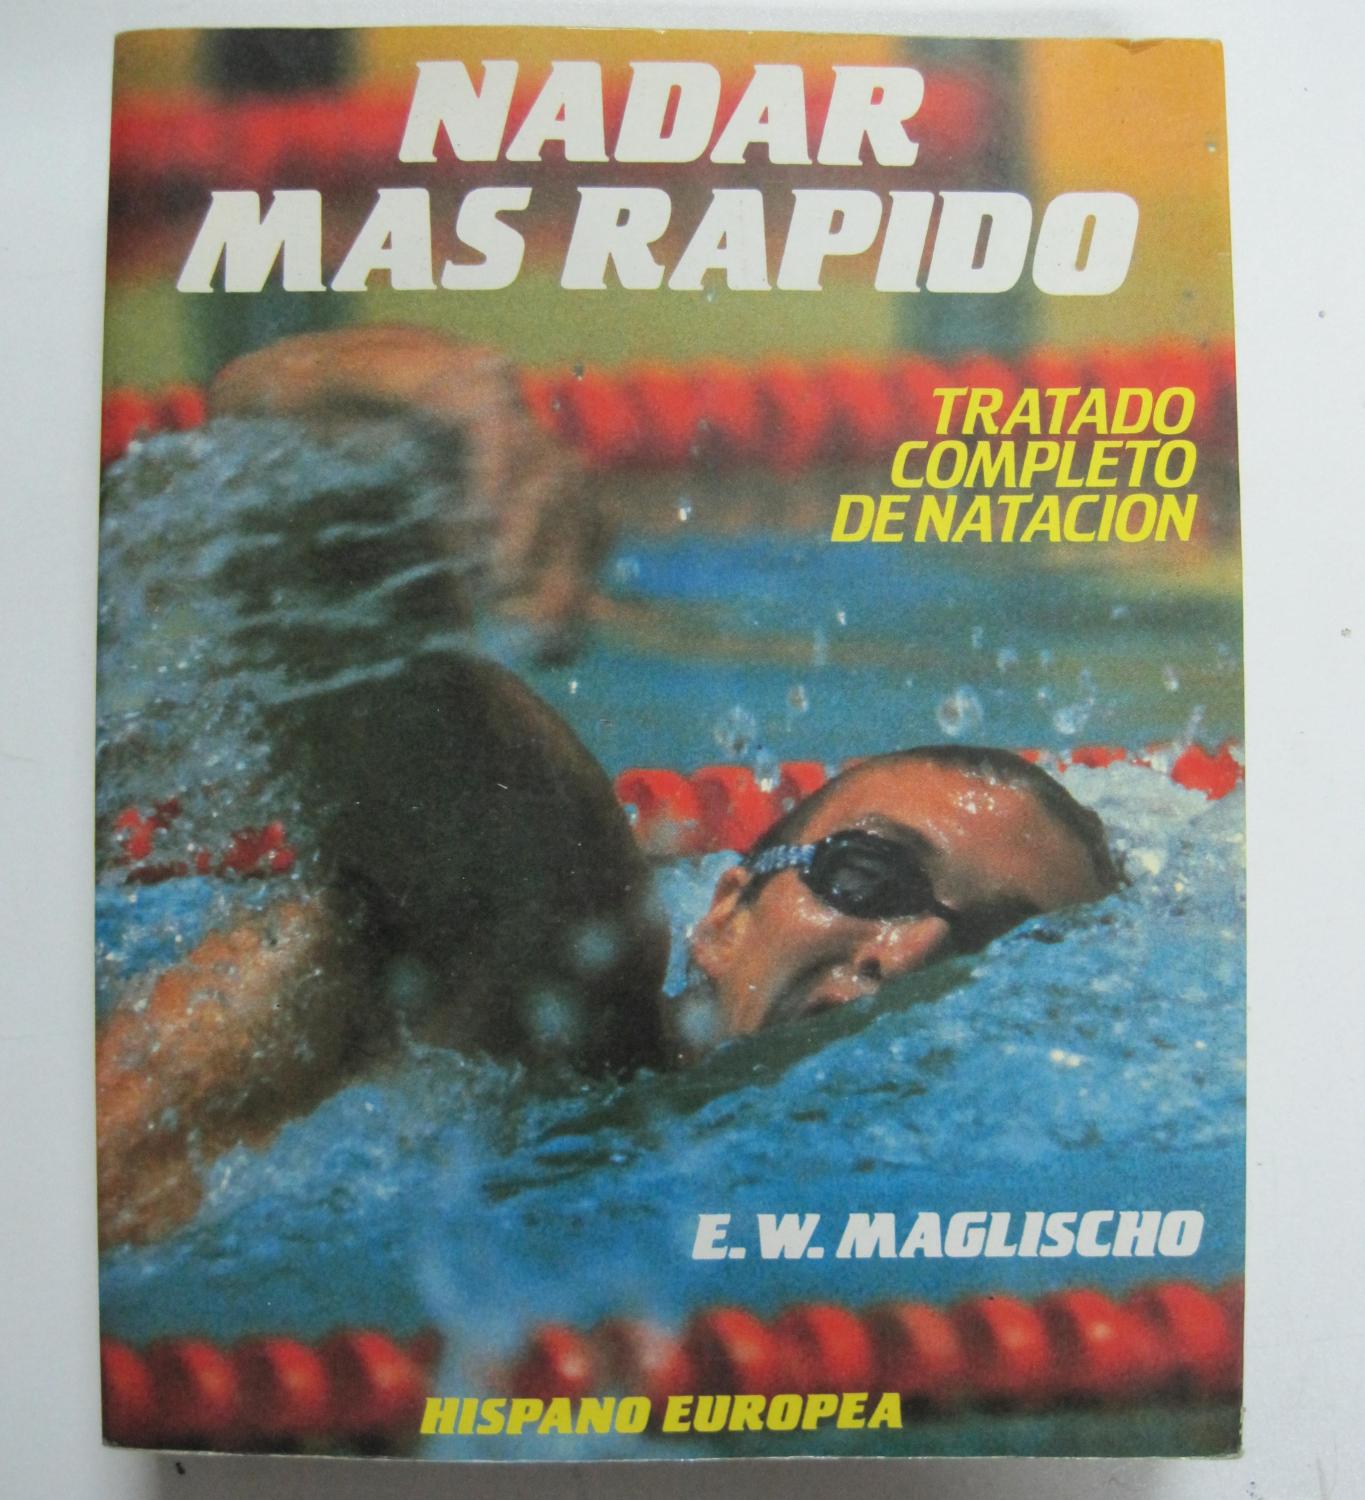 Nadar mas rapido - Ernest W. Maglischo